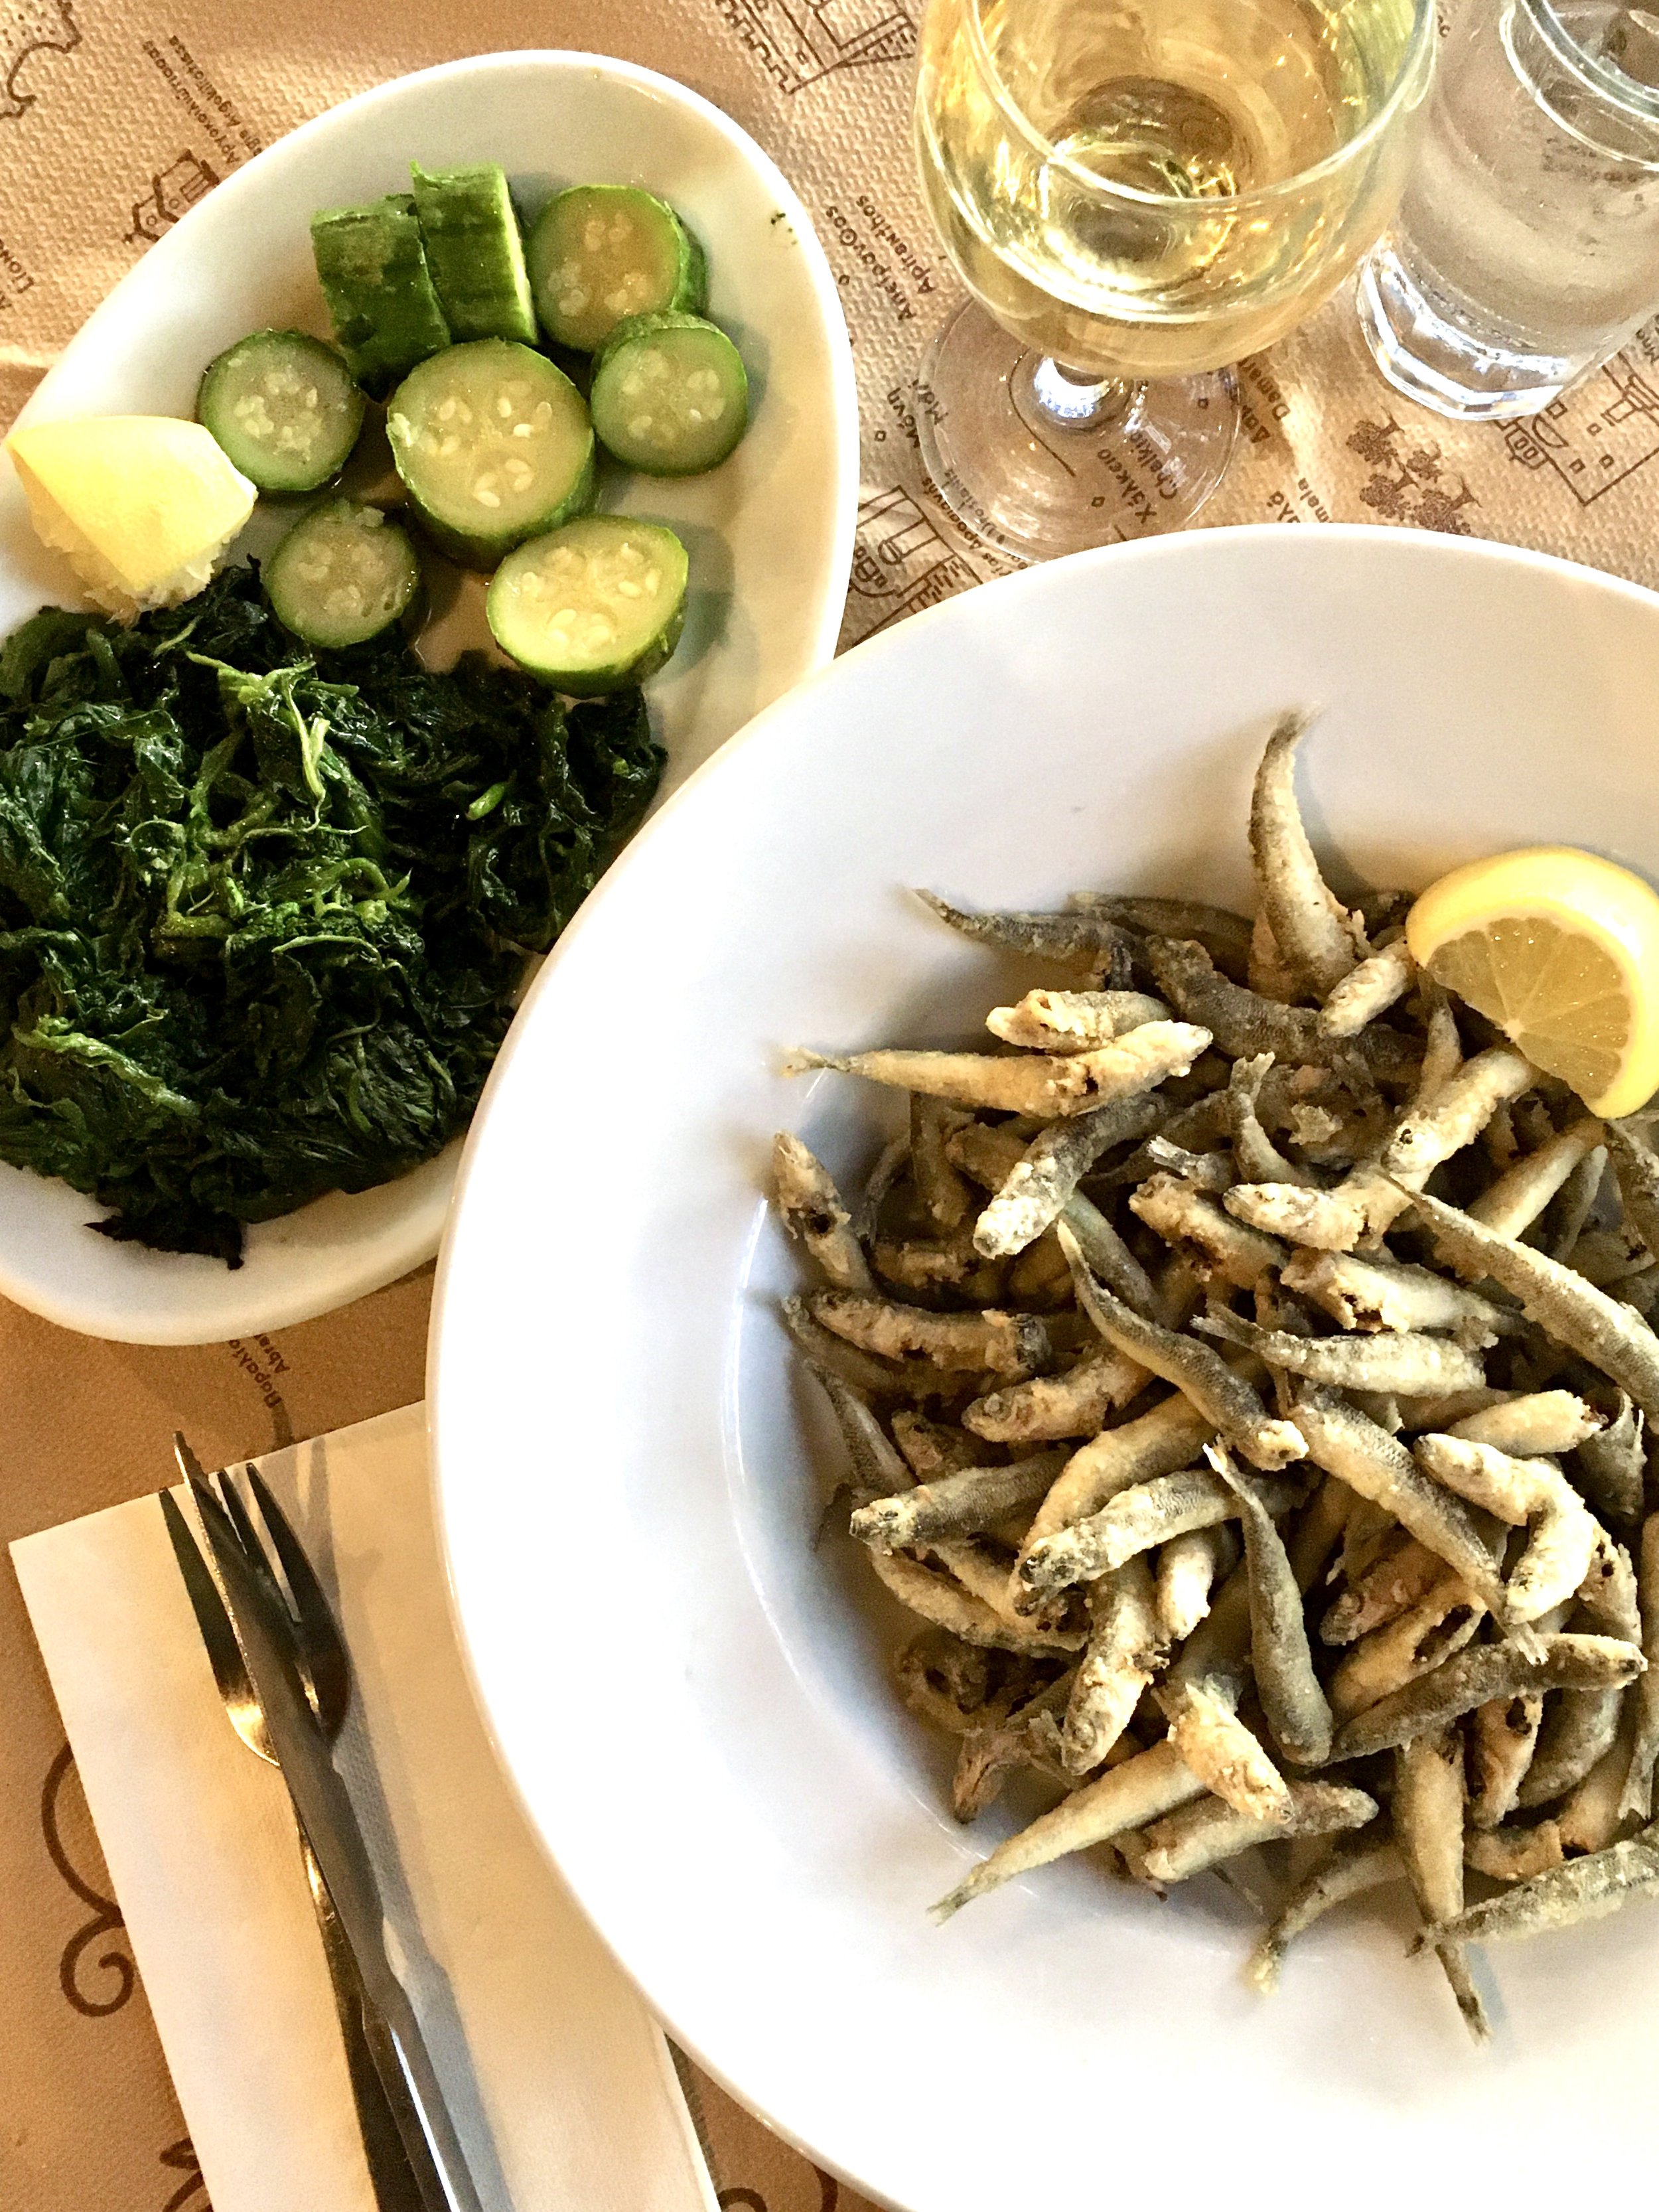 Fried sardines (atherina) in Plaka, Naxos.